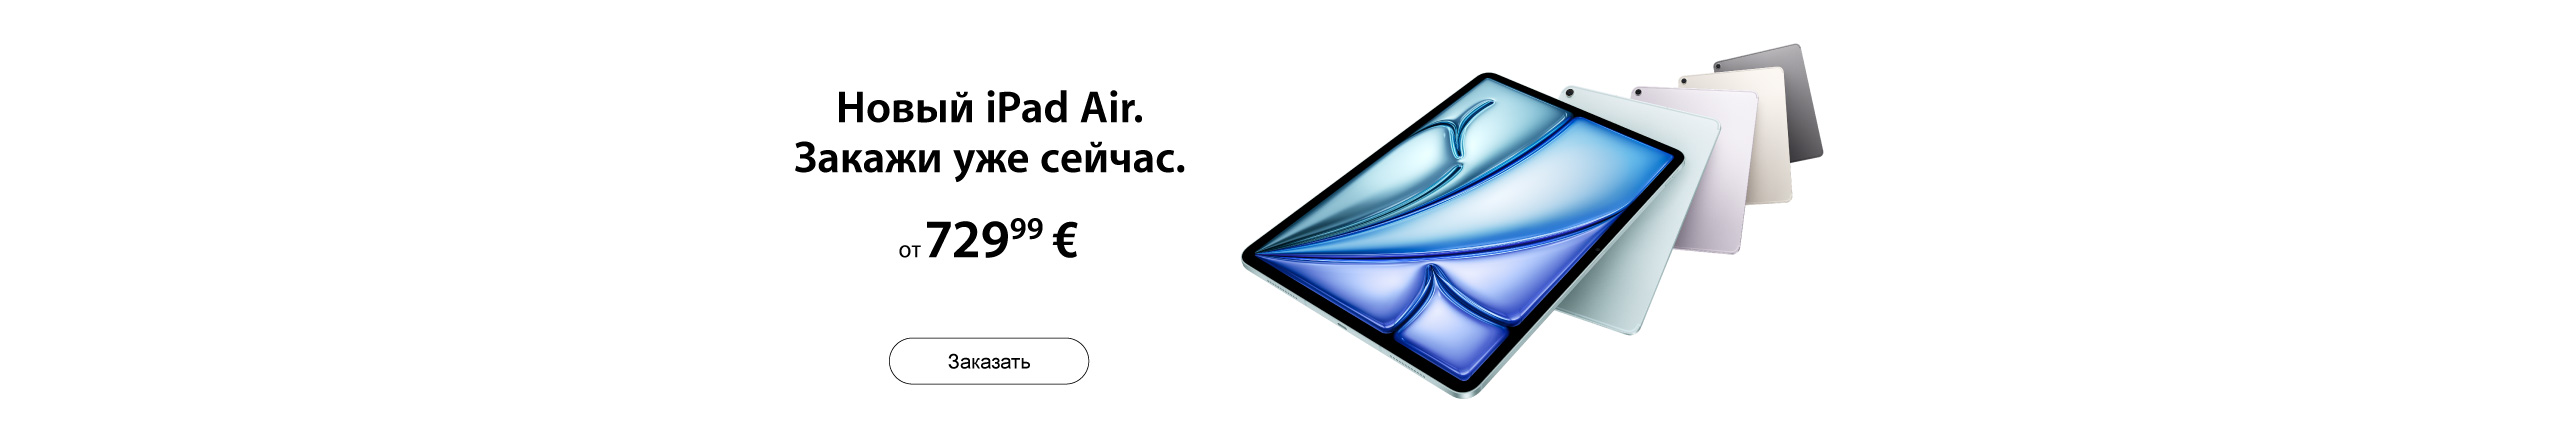 Новый iPad Air!